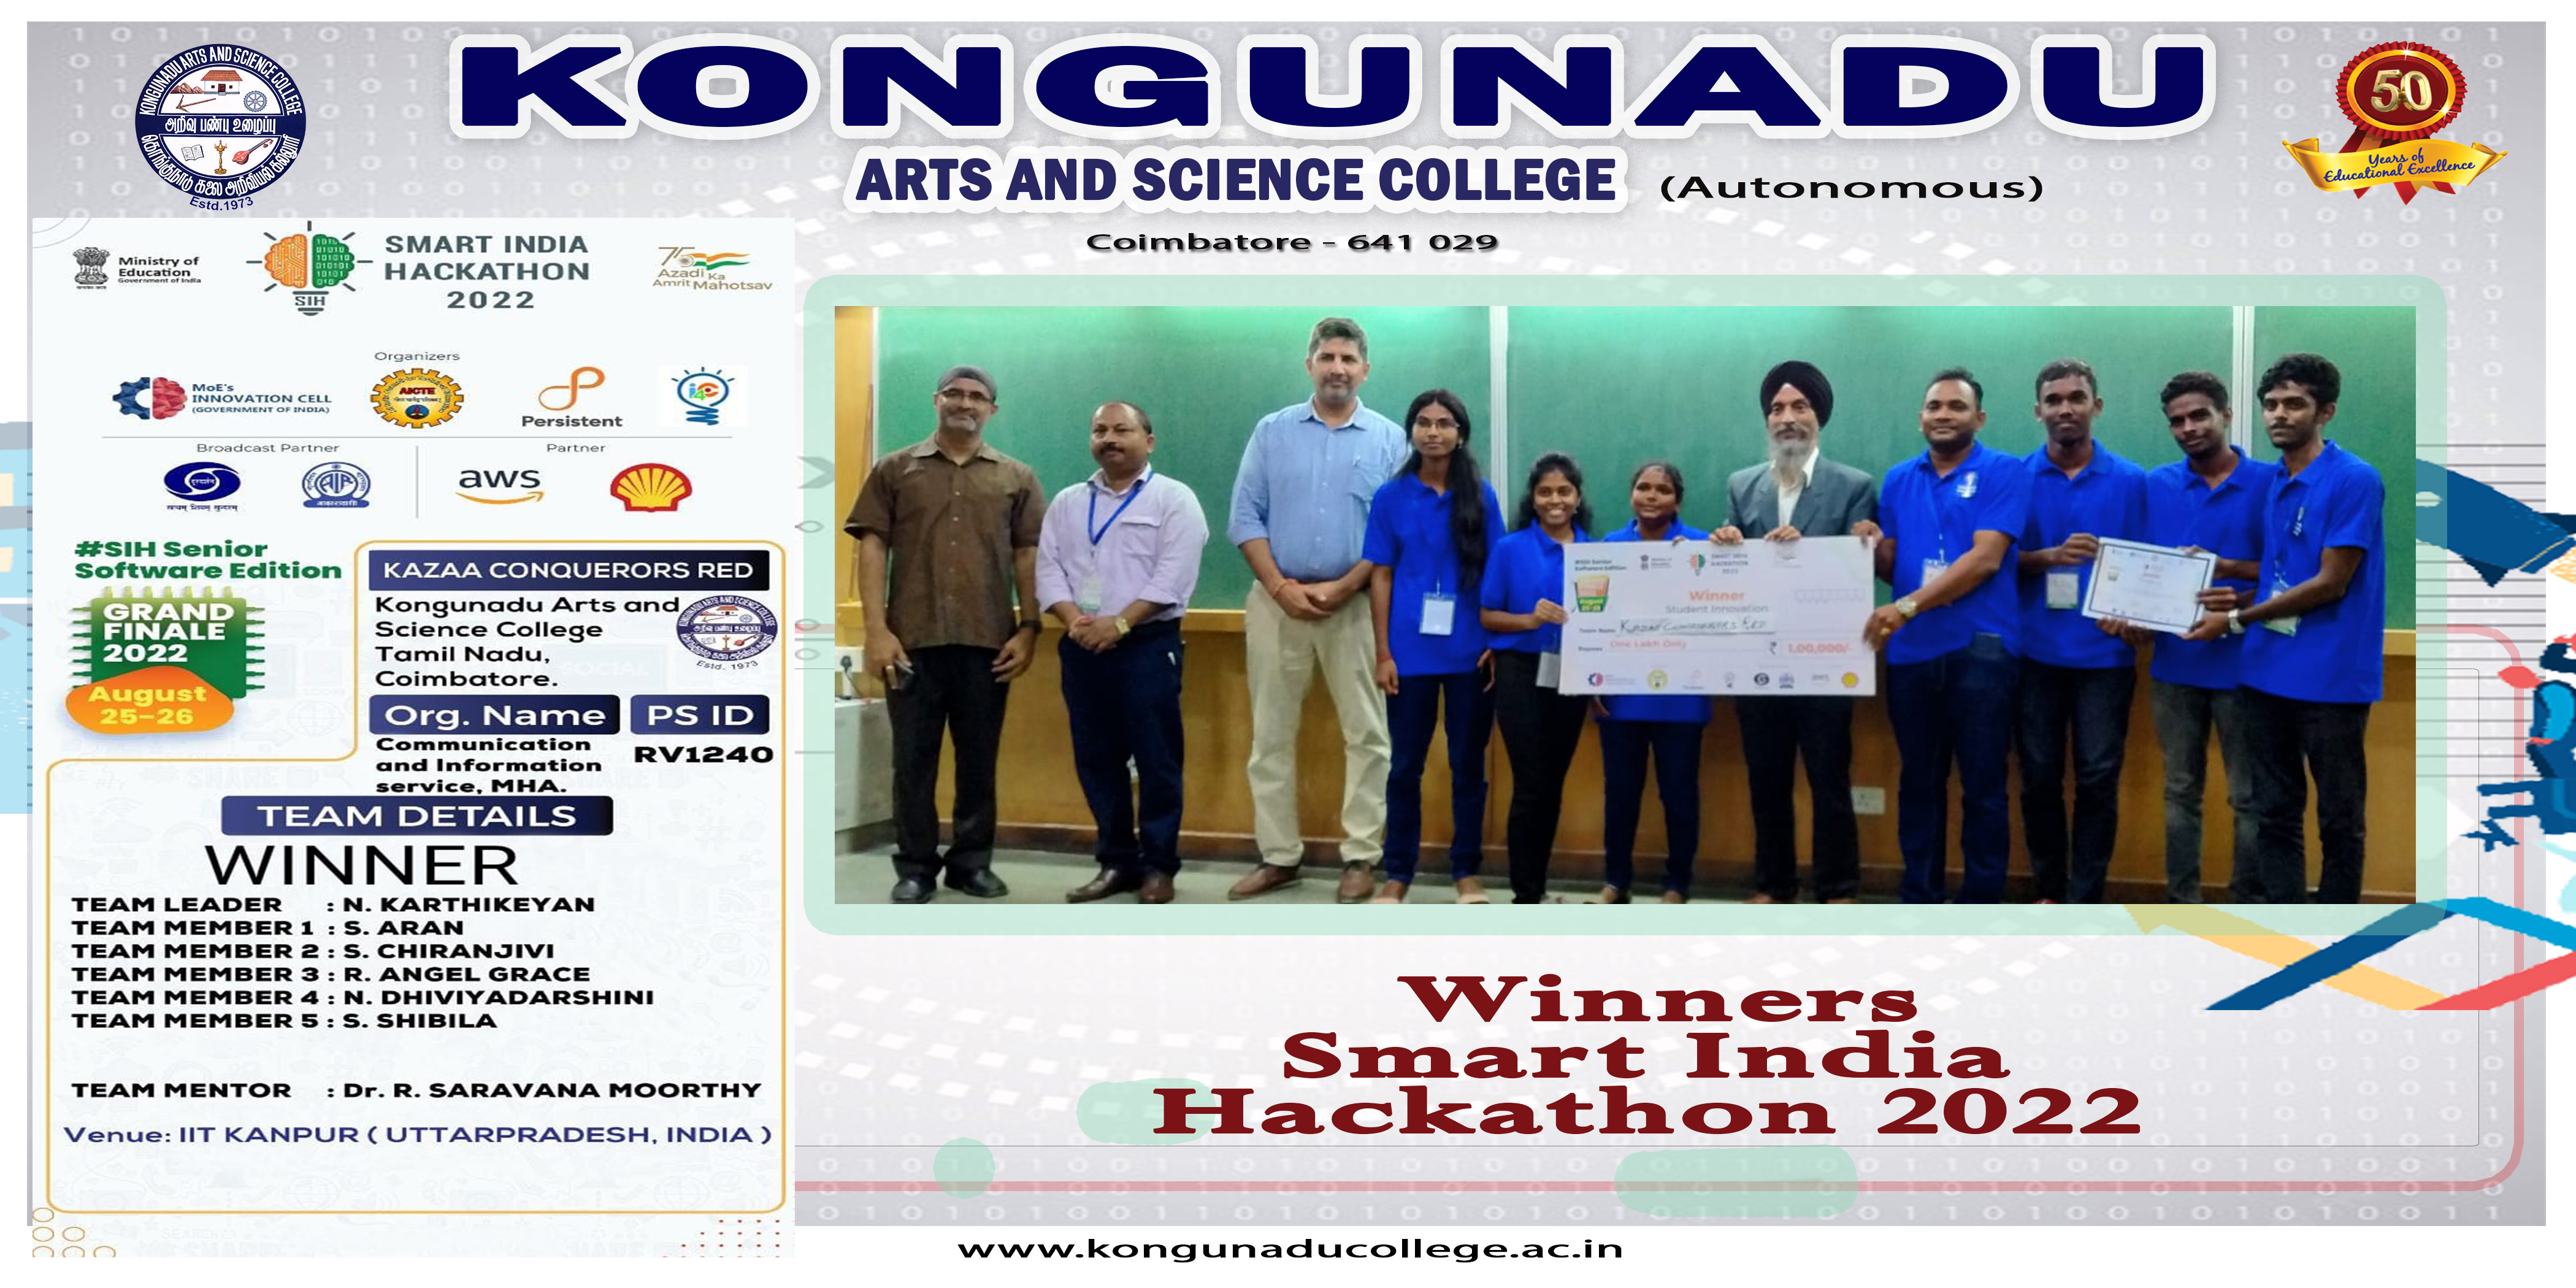  Winners  Smart India  Hackathon 2022